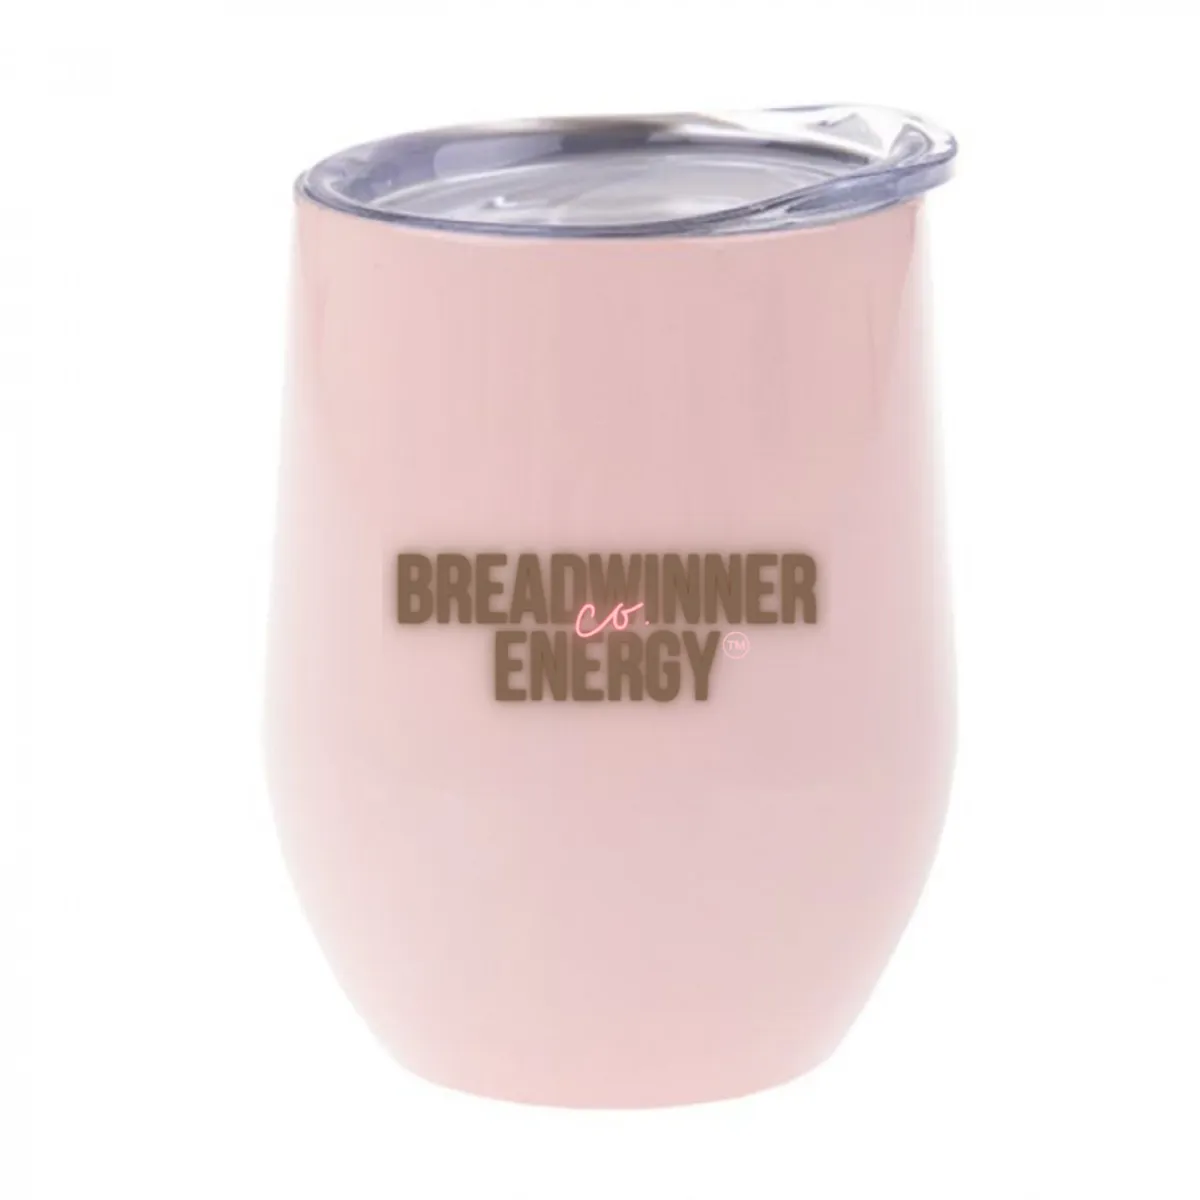 Breadwinner Energy Wine Tumbler Cup